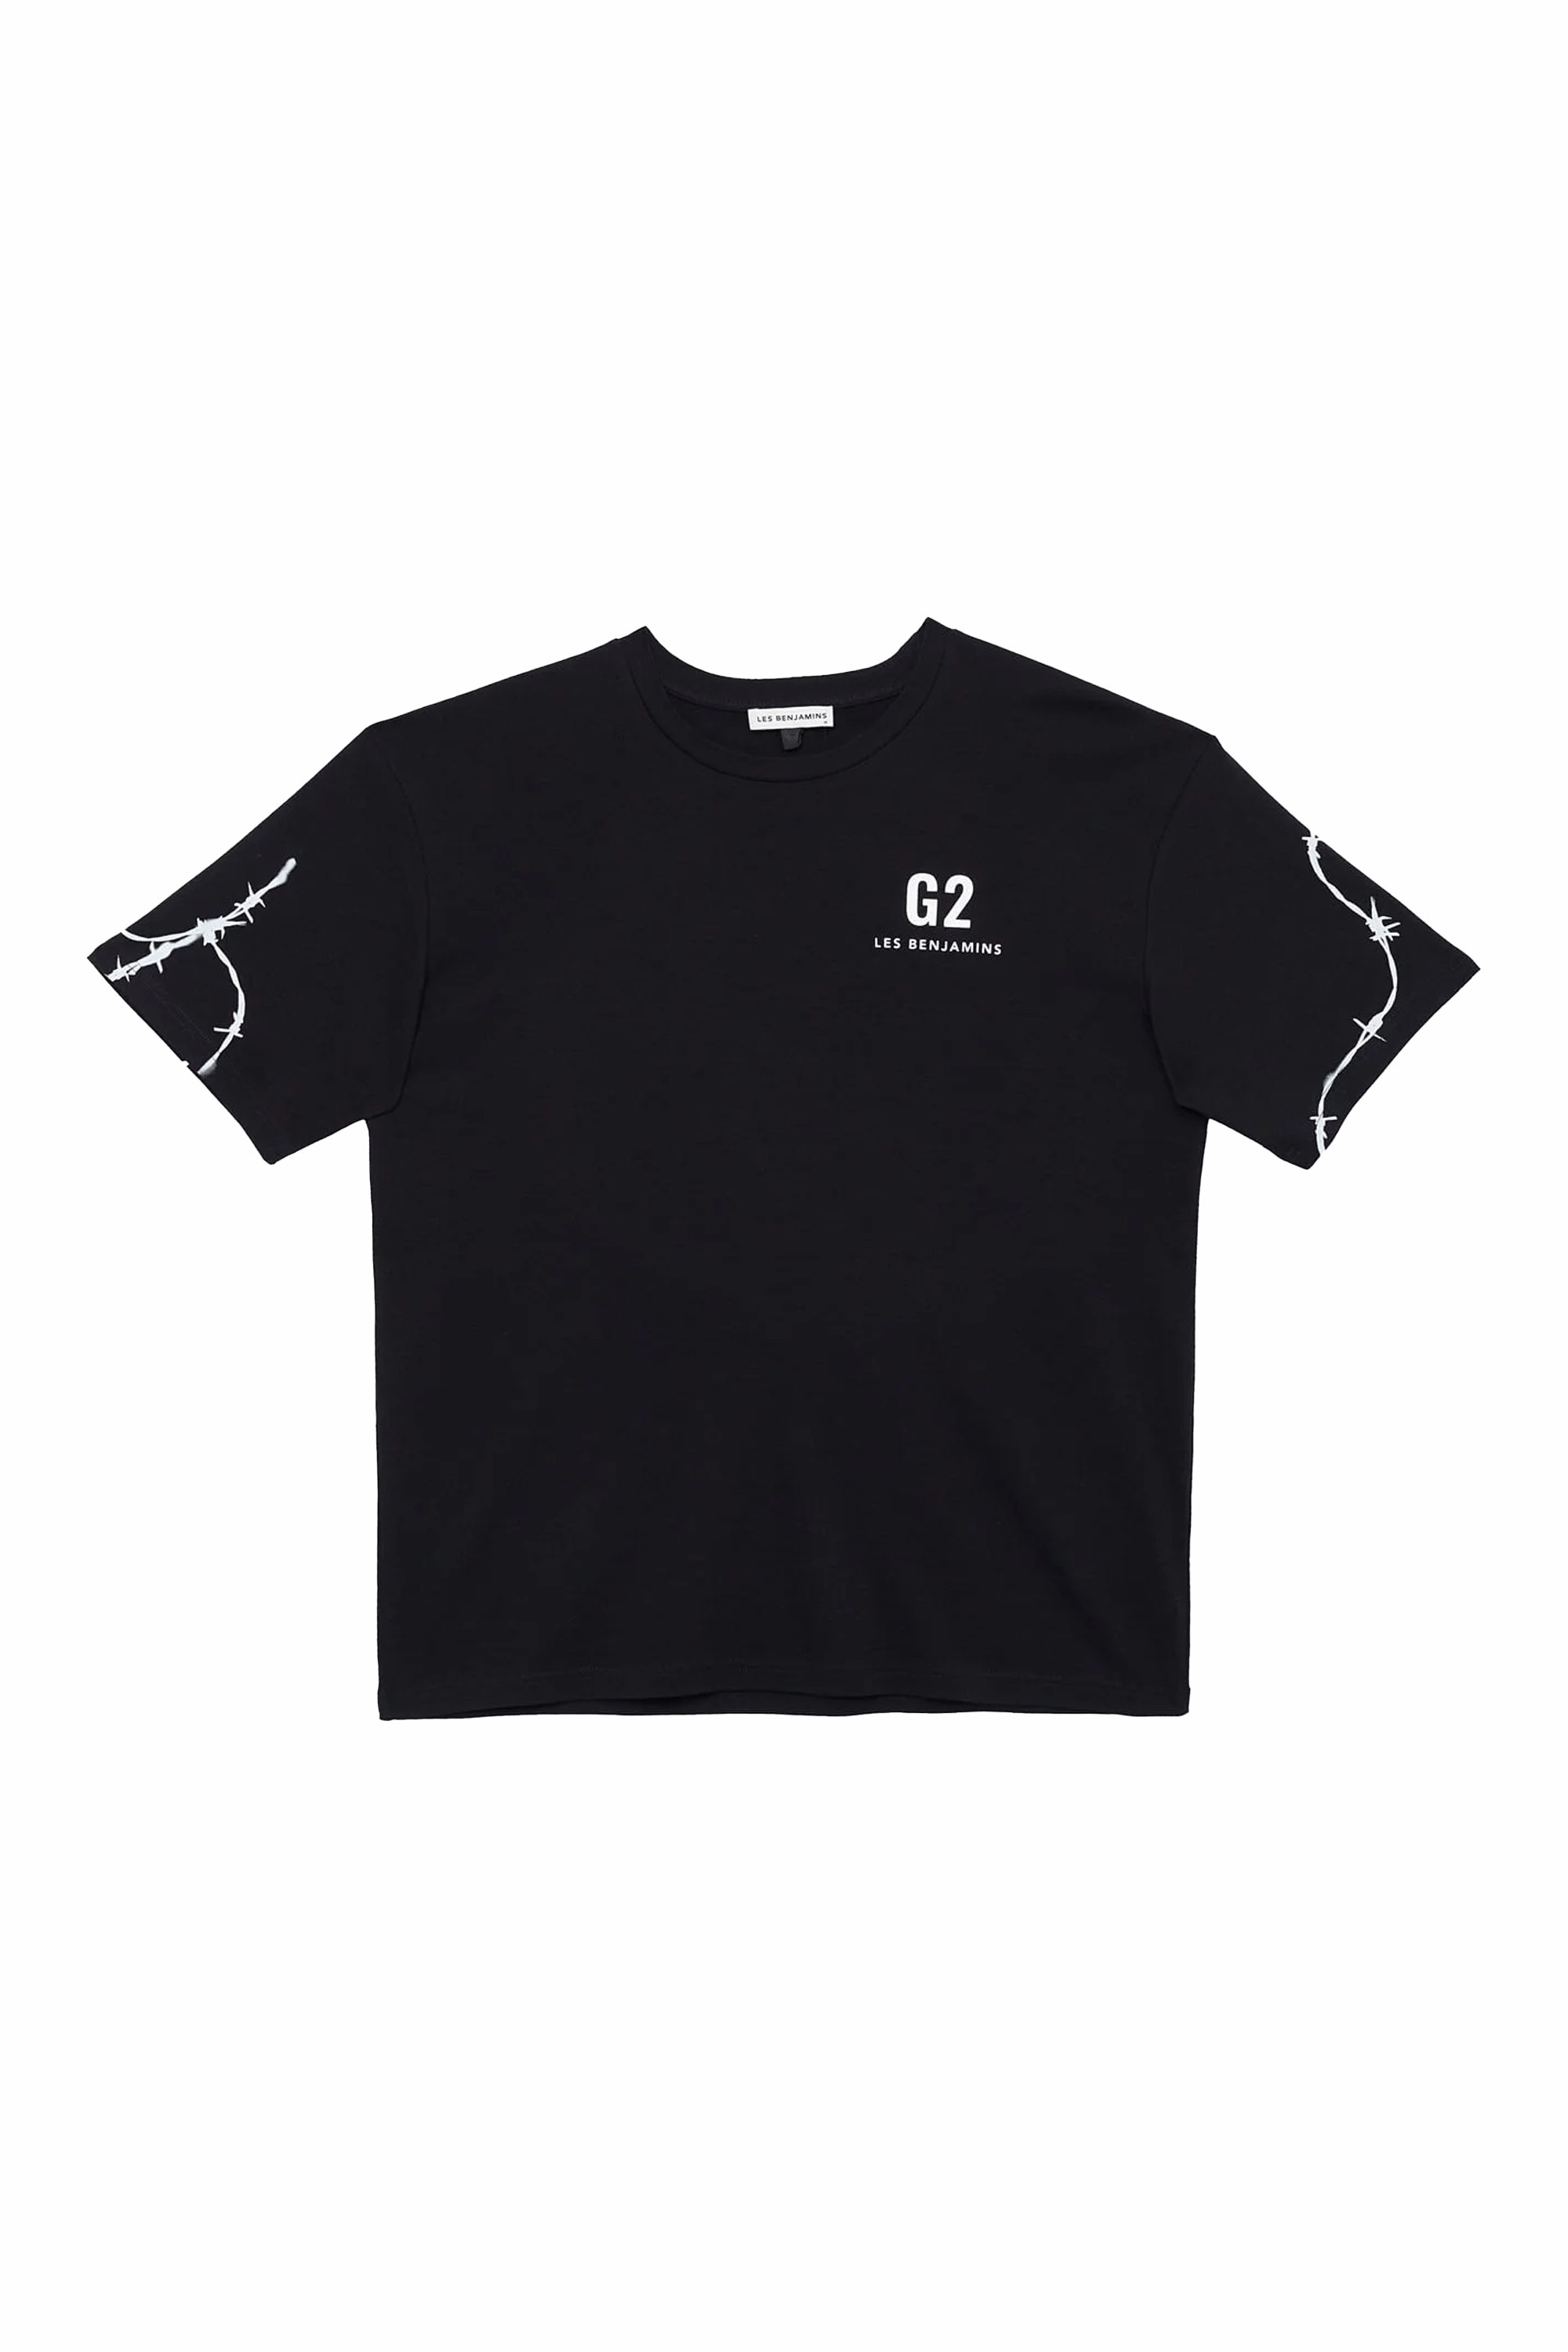 G2 x LB Black T-Shirt – EU - G2 Esports